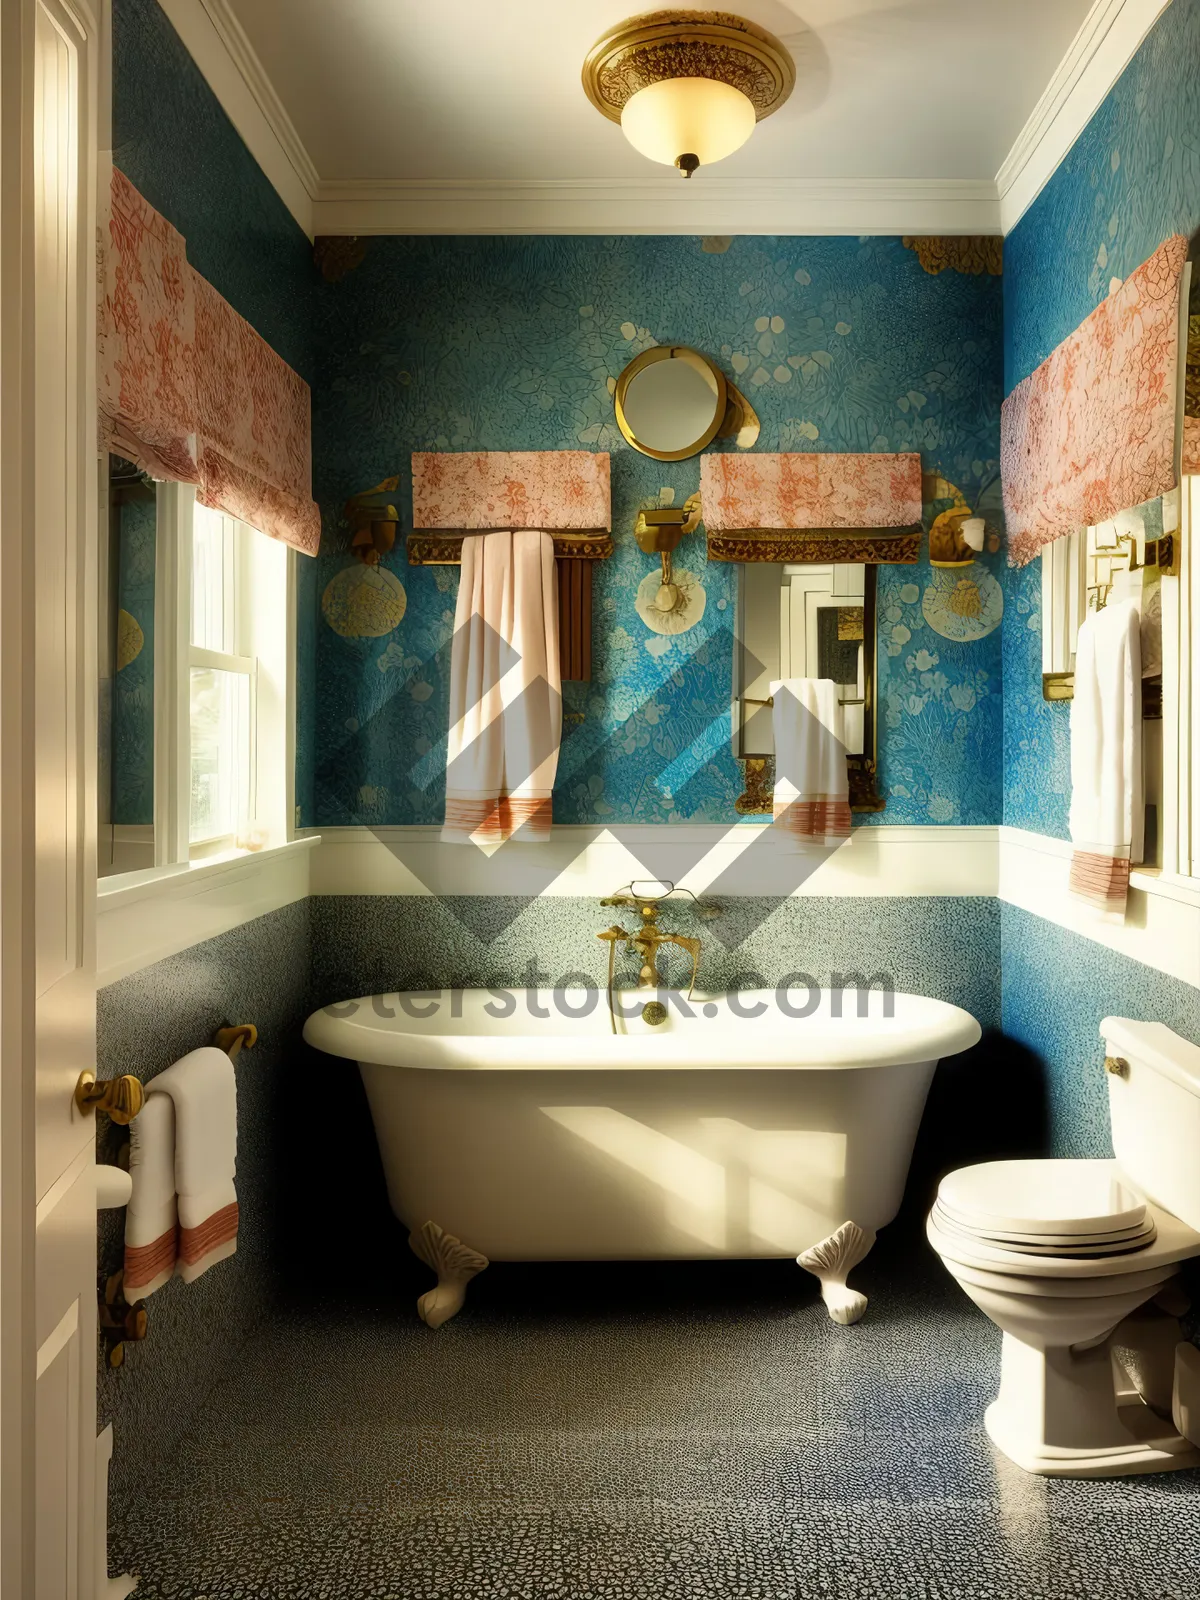 Picture of Contemporary Bathroom Design with Luxury Interior